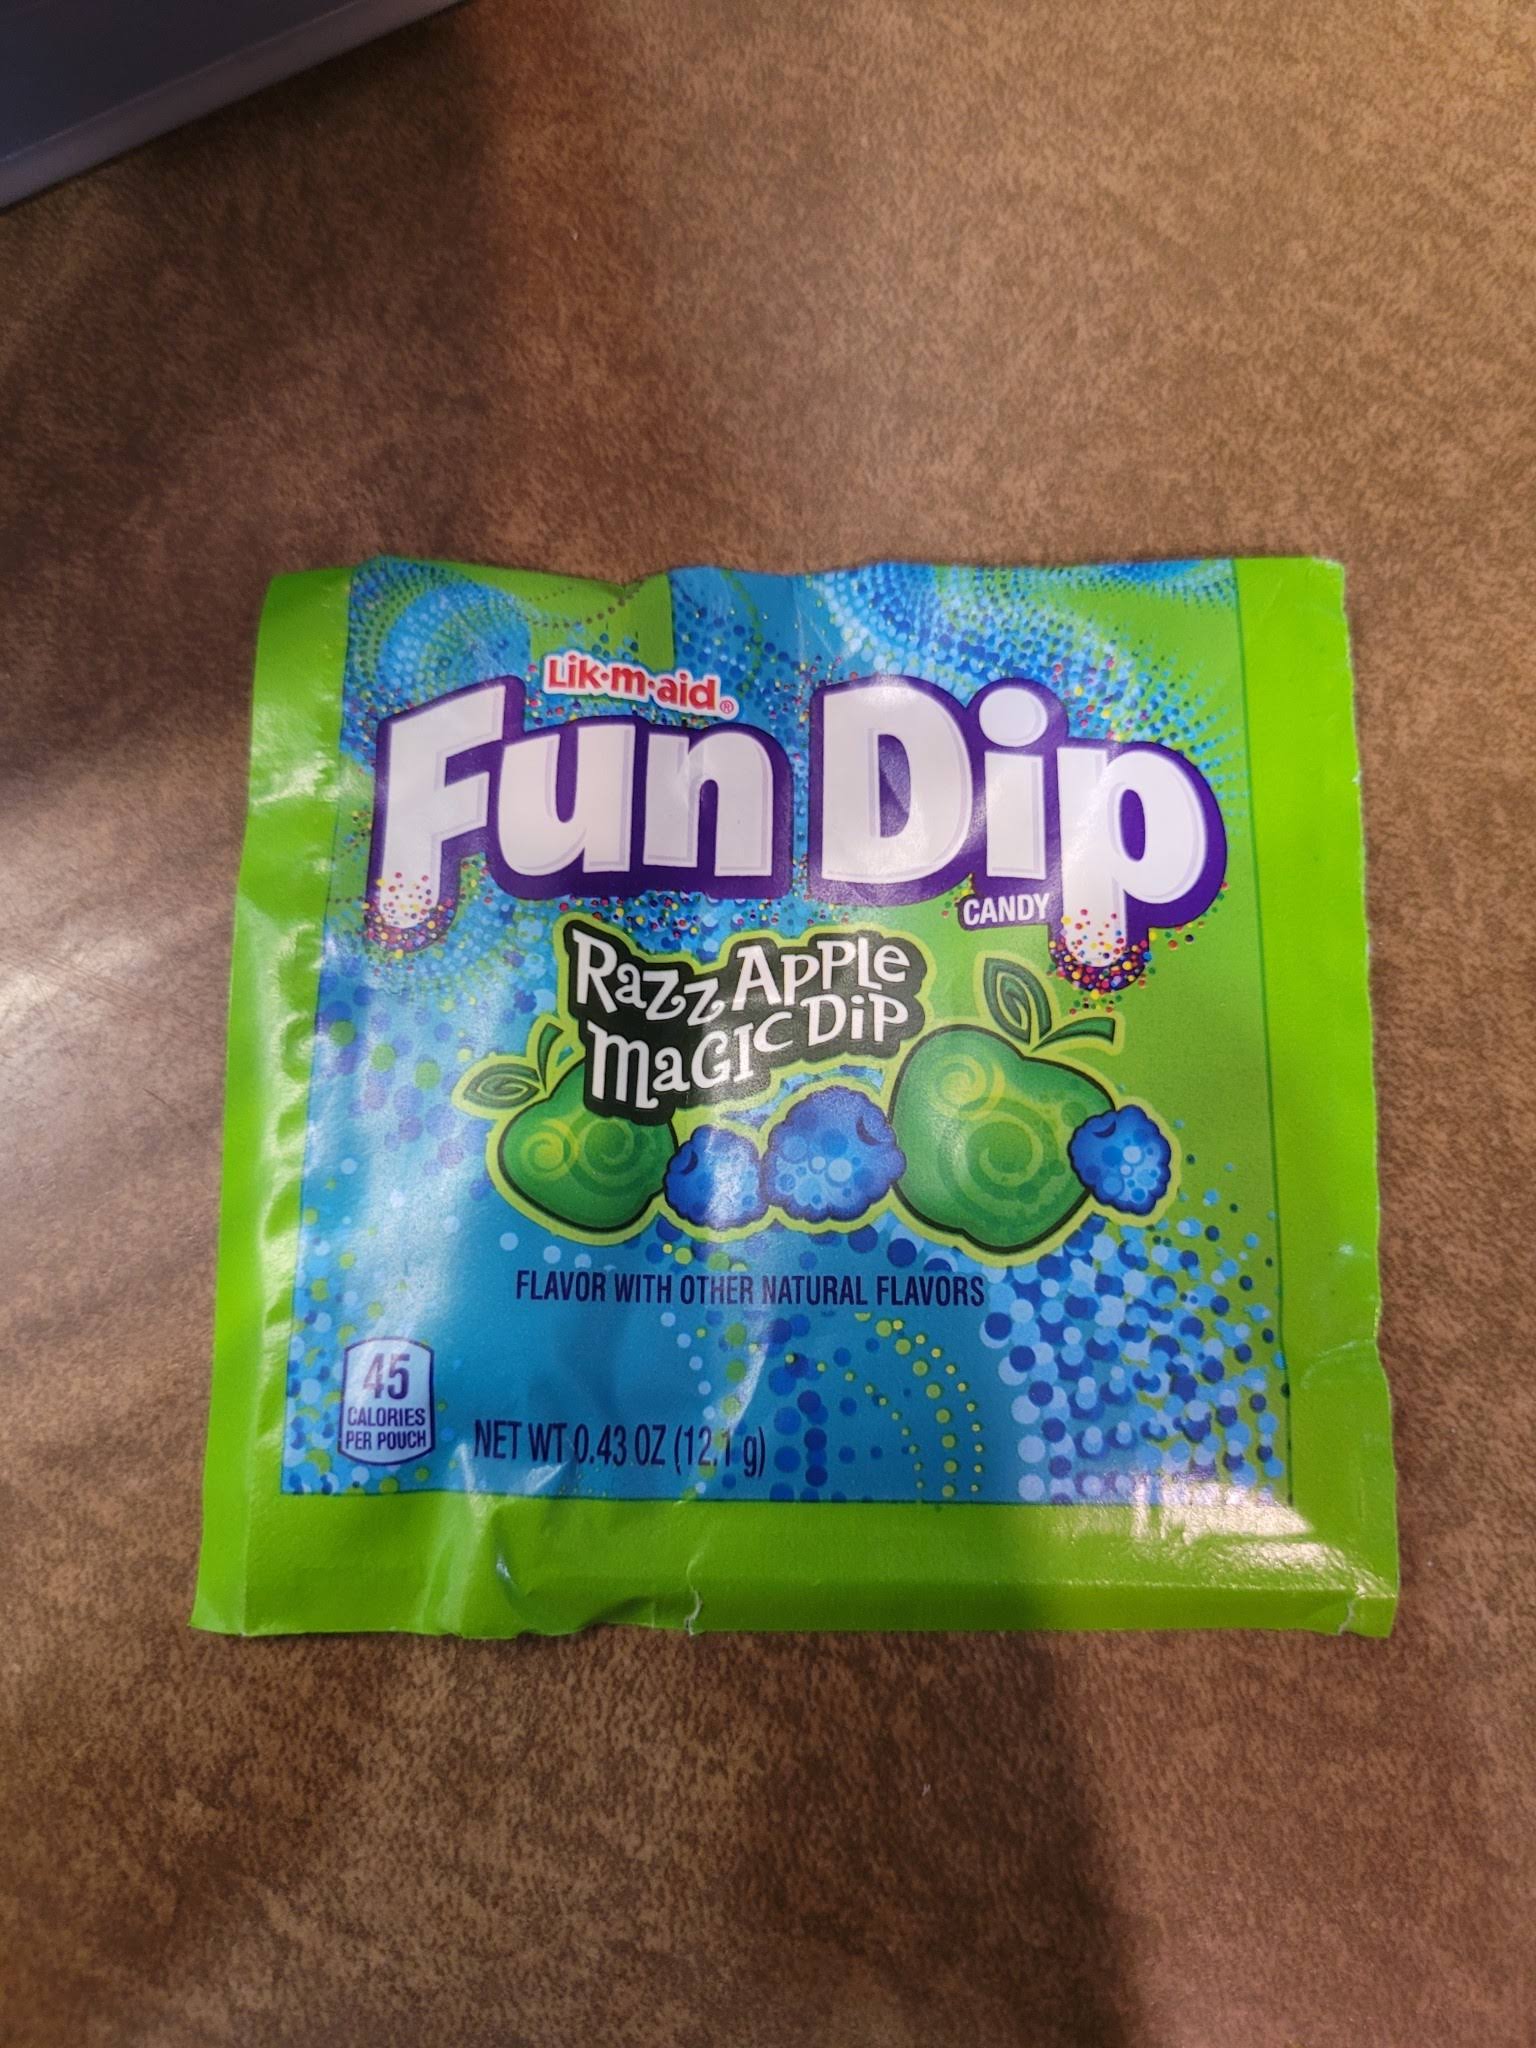 Lik M Aid Fun Dip Candy Razz Apple Magic Dip